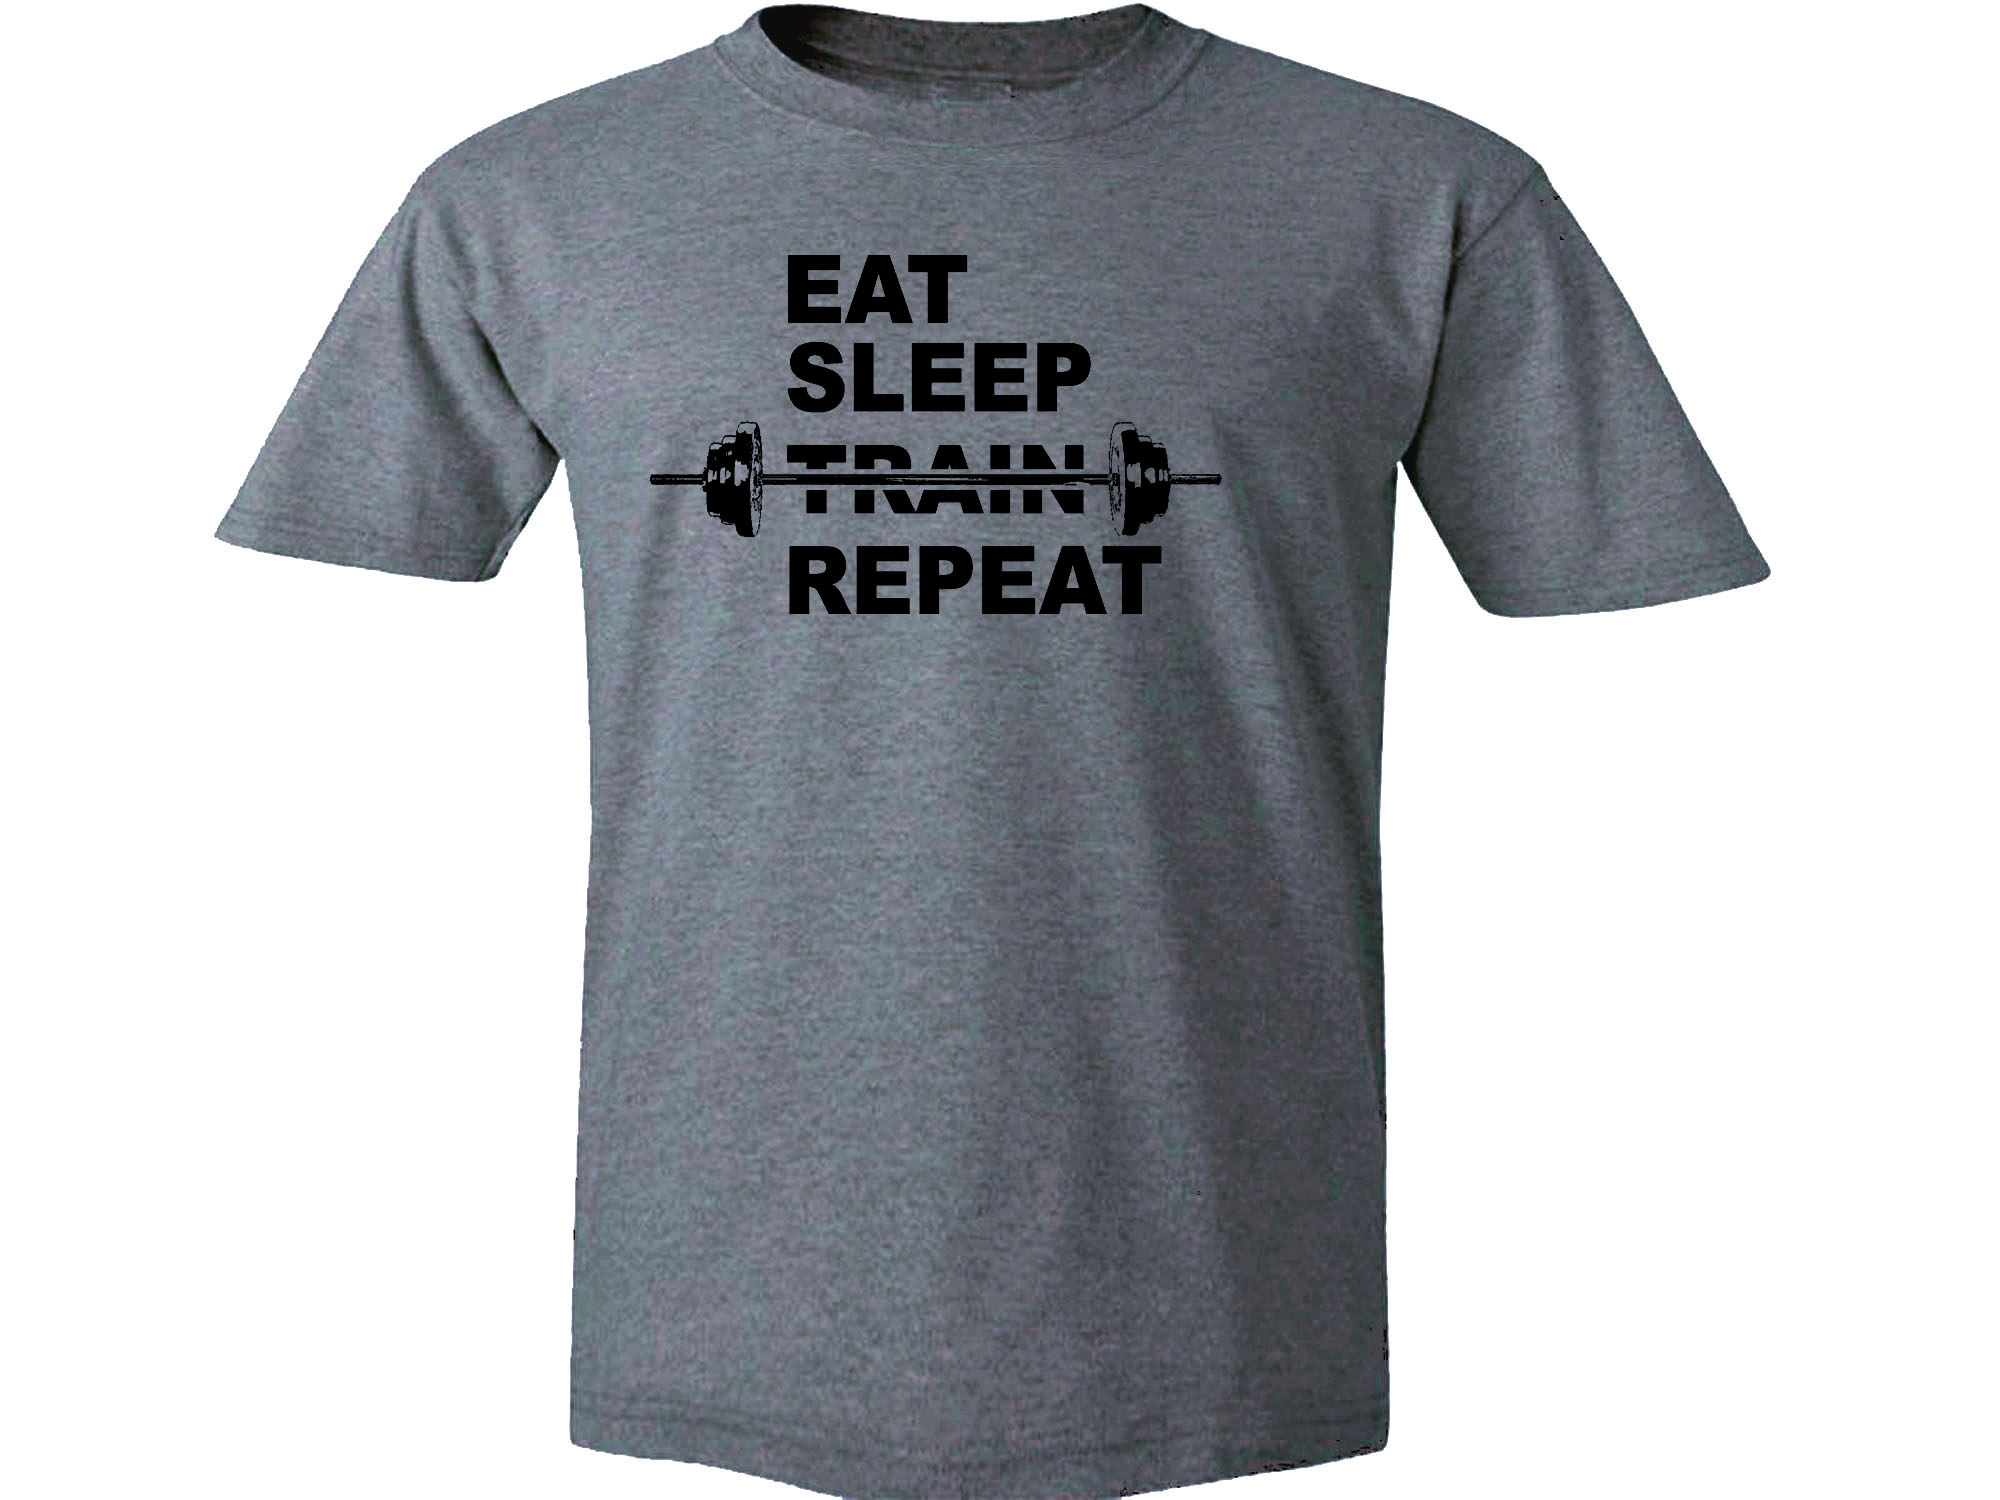 Eat sleep train repeat gray t-shirt